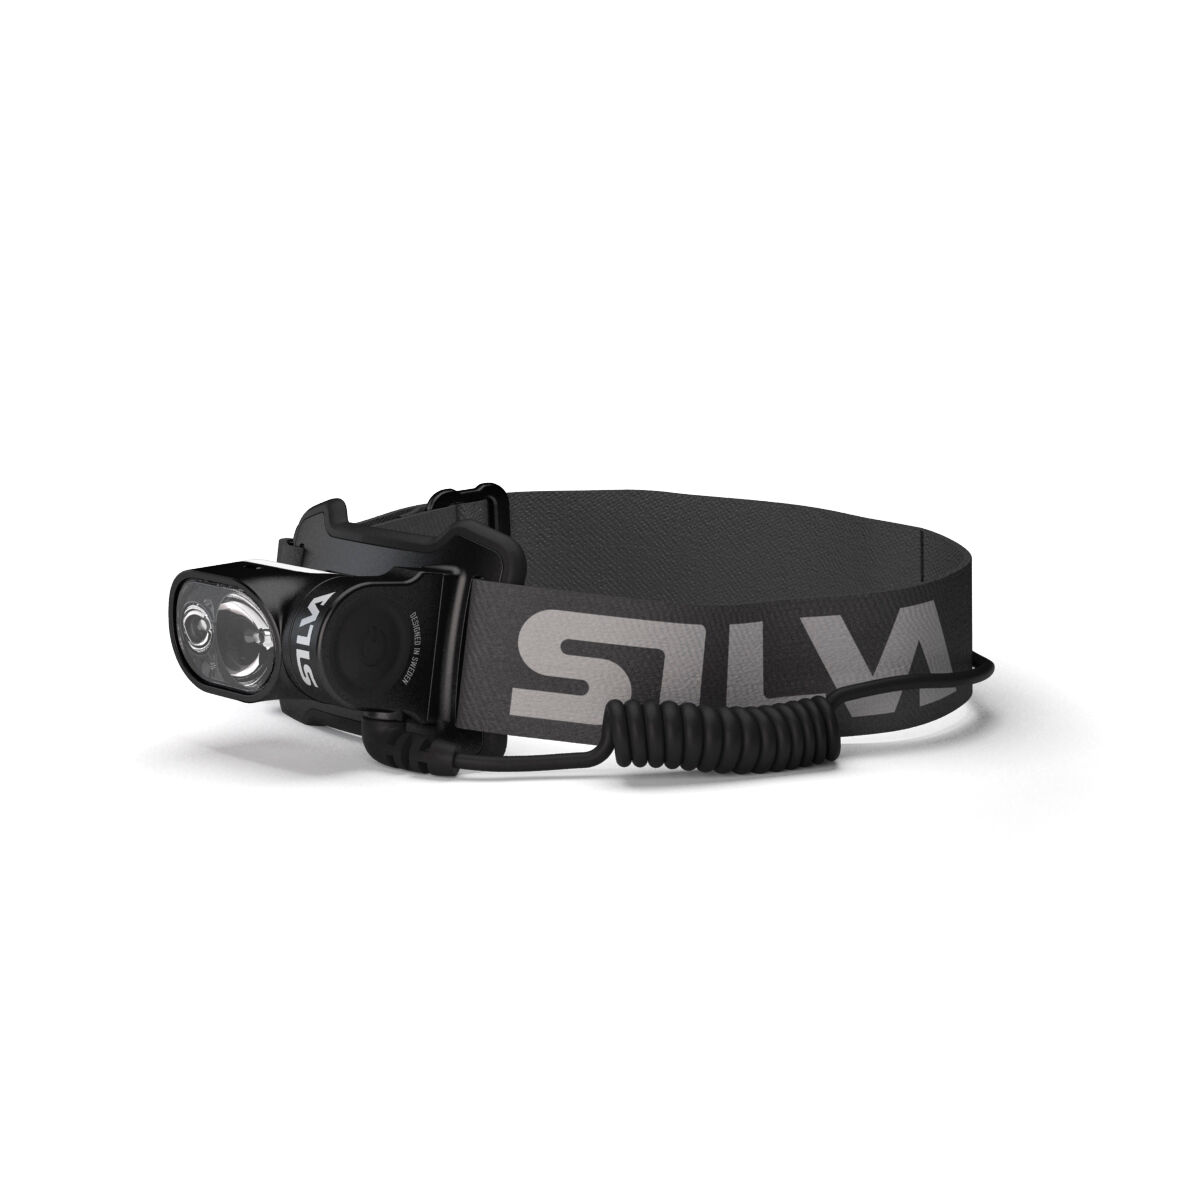 Silva Cross Trail 6X - Stirnlampe